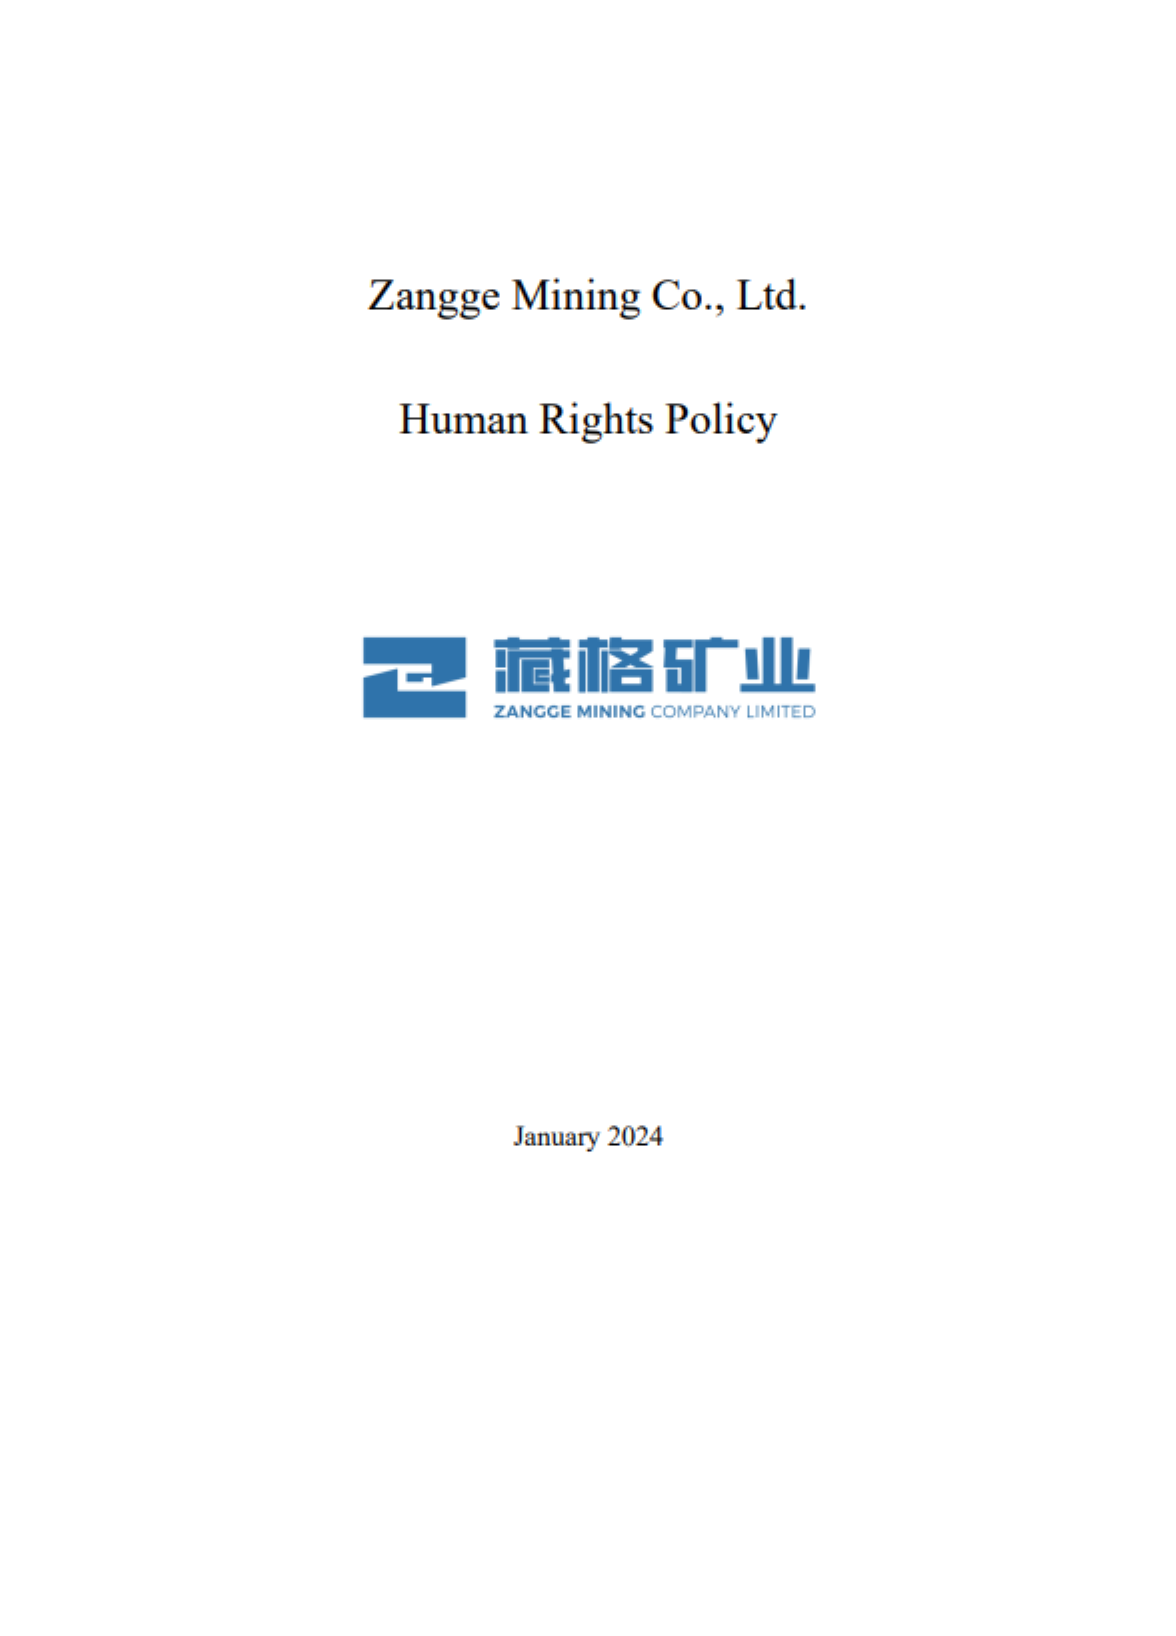 Human Rights Policy of Zangge Mining Co., Ltd.